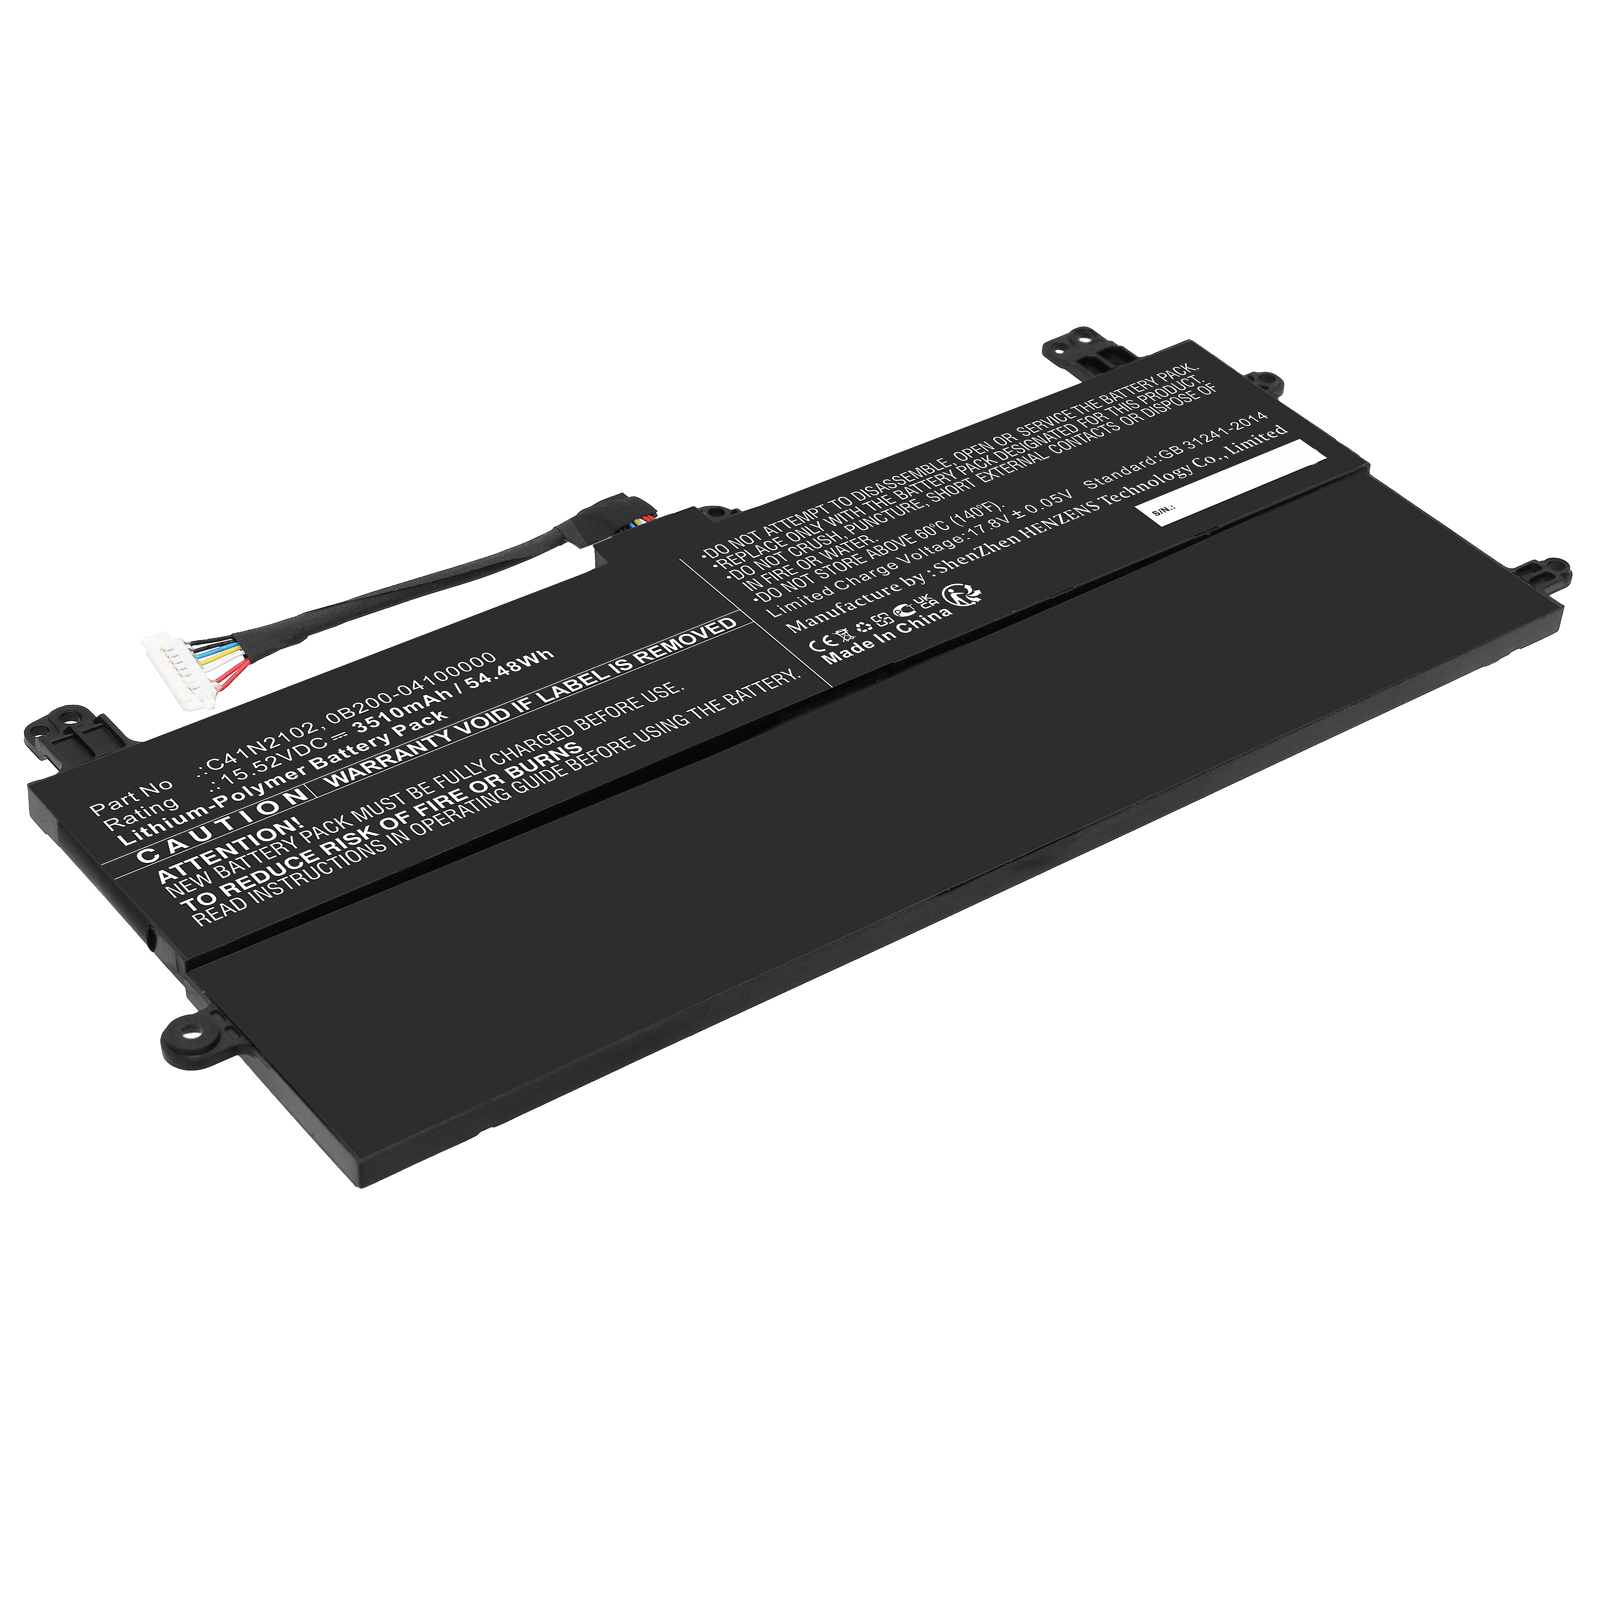 Synergy Digital Laptop Battery, Compatible with Asus C41N2102 Laptop Battery (Li-Pol, 15.52V, 3150mAh)